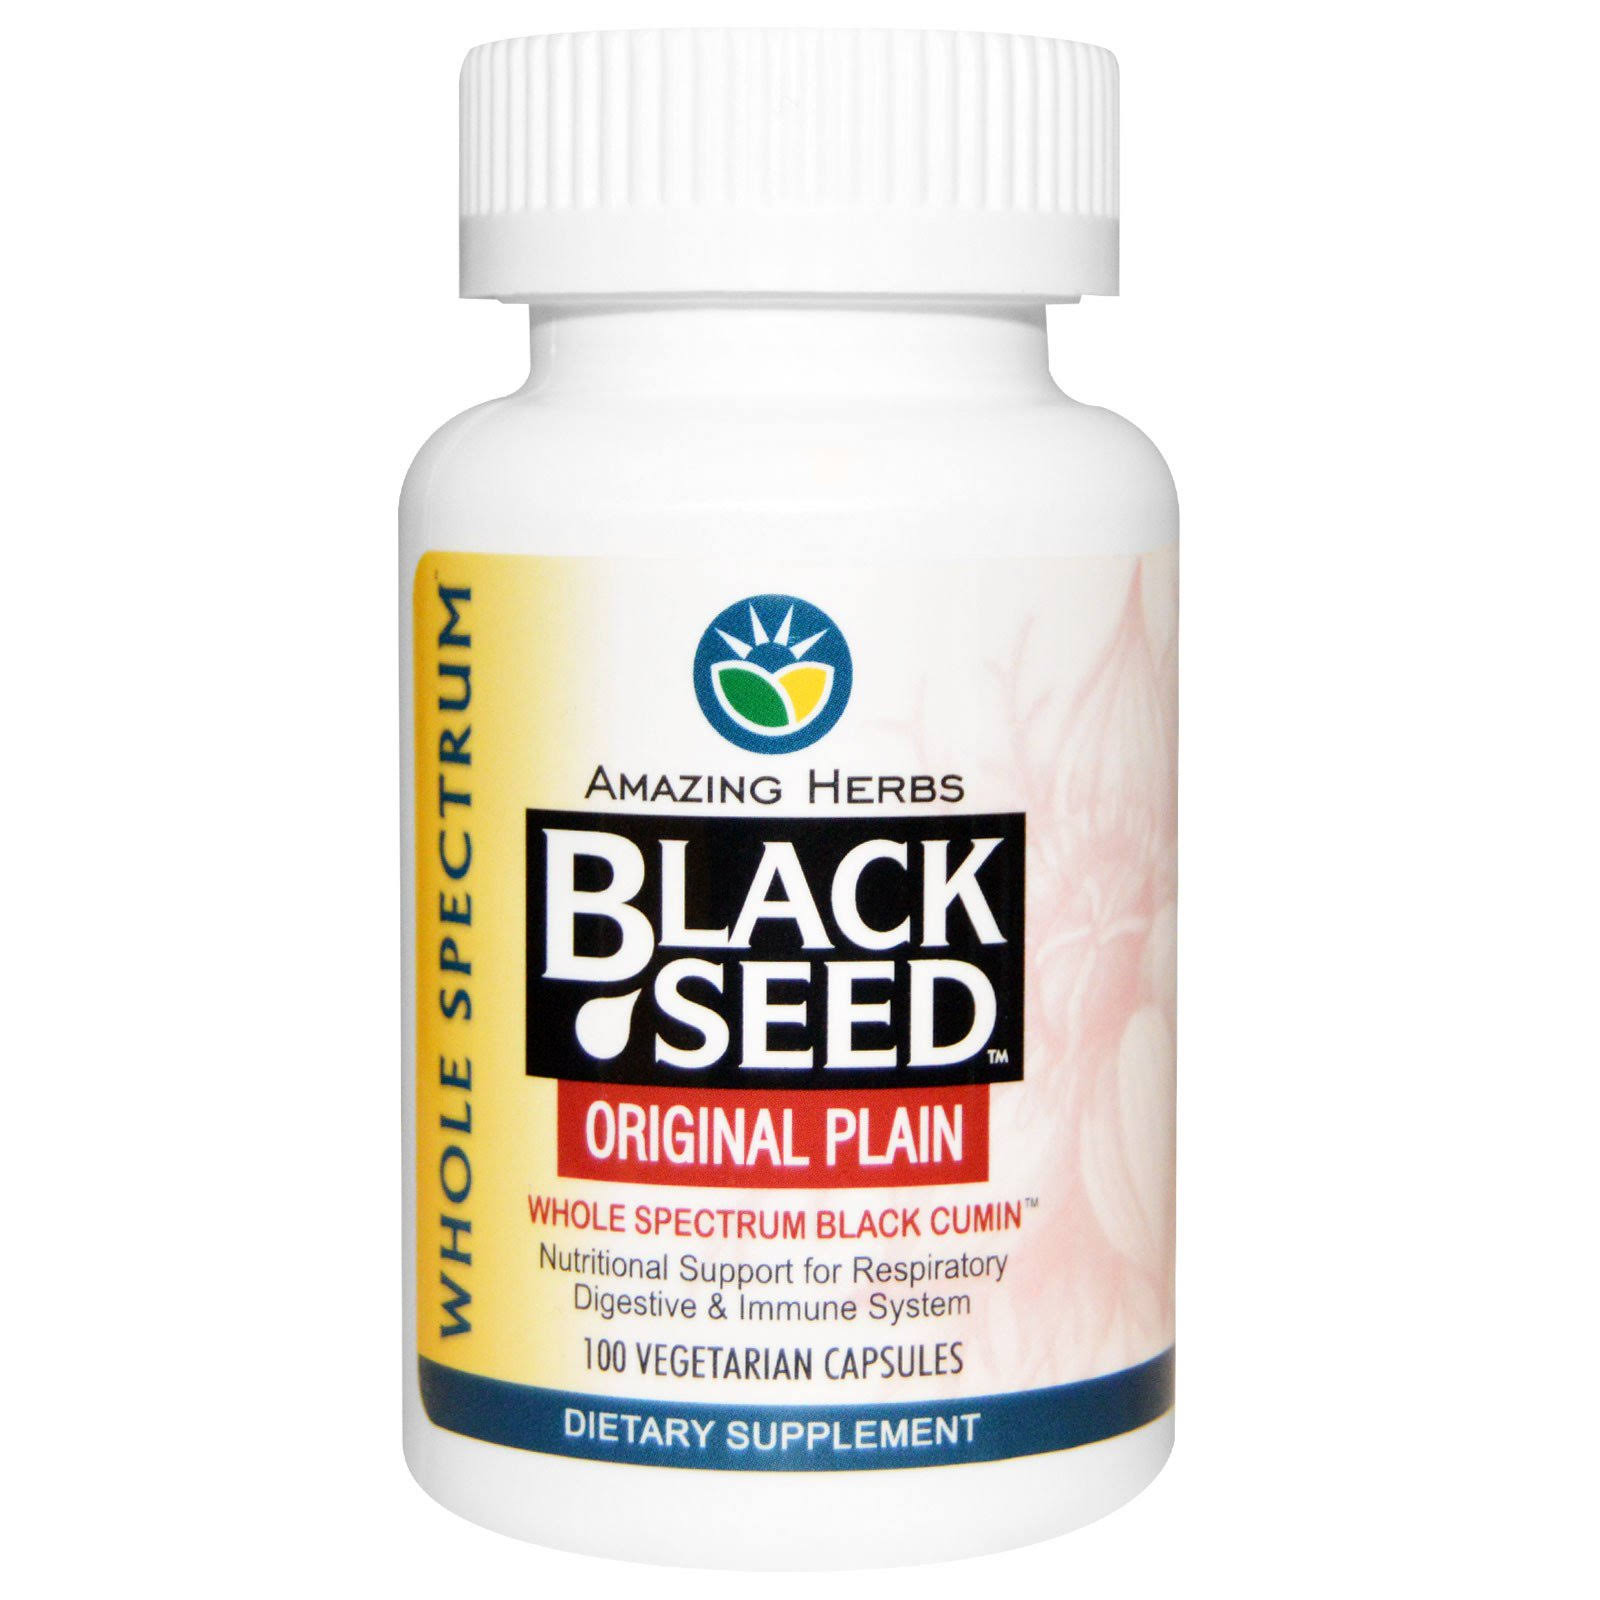 Amazing Herbs Black Seed - Original Plain, 100 Capsules